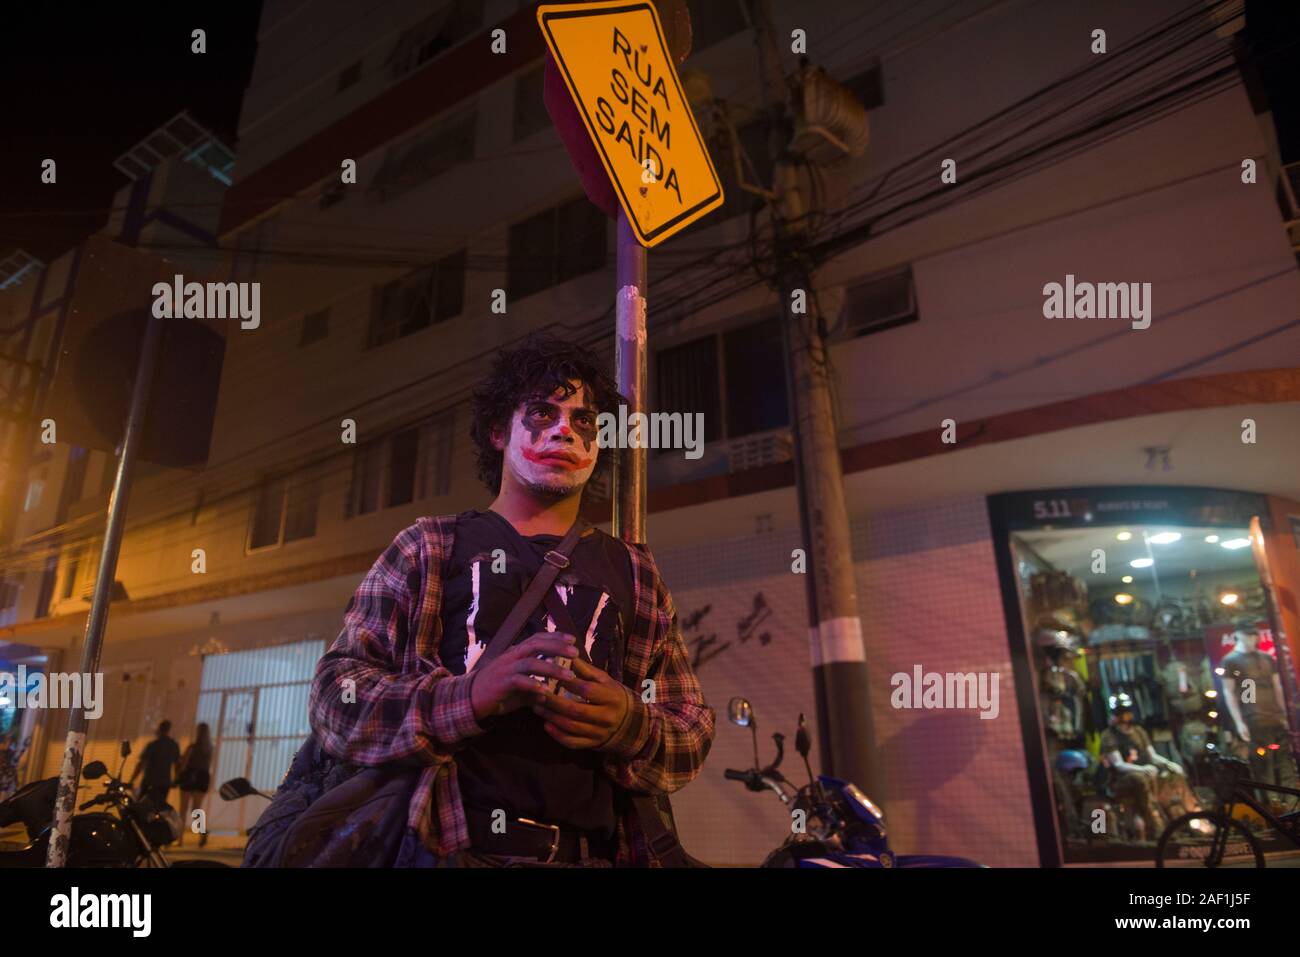 Balneario Camboriu, Santa Catarina, Brazil - November 16, 2019: Young local street artist with Joker costume in a street corner of busy street Stock Photo